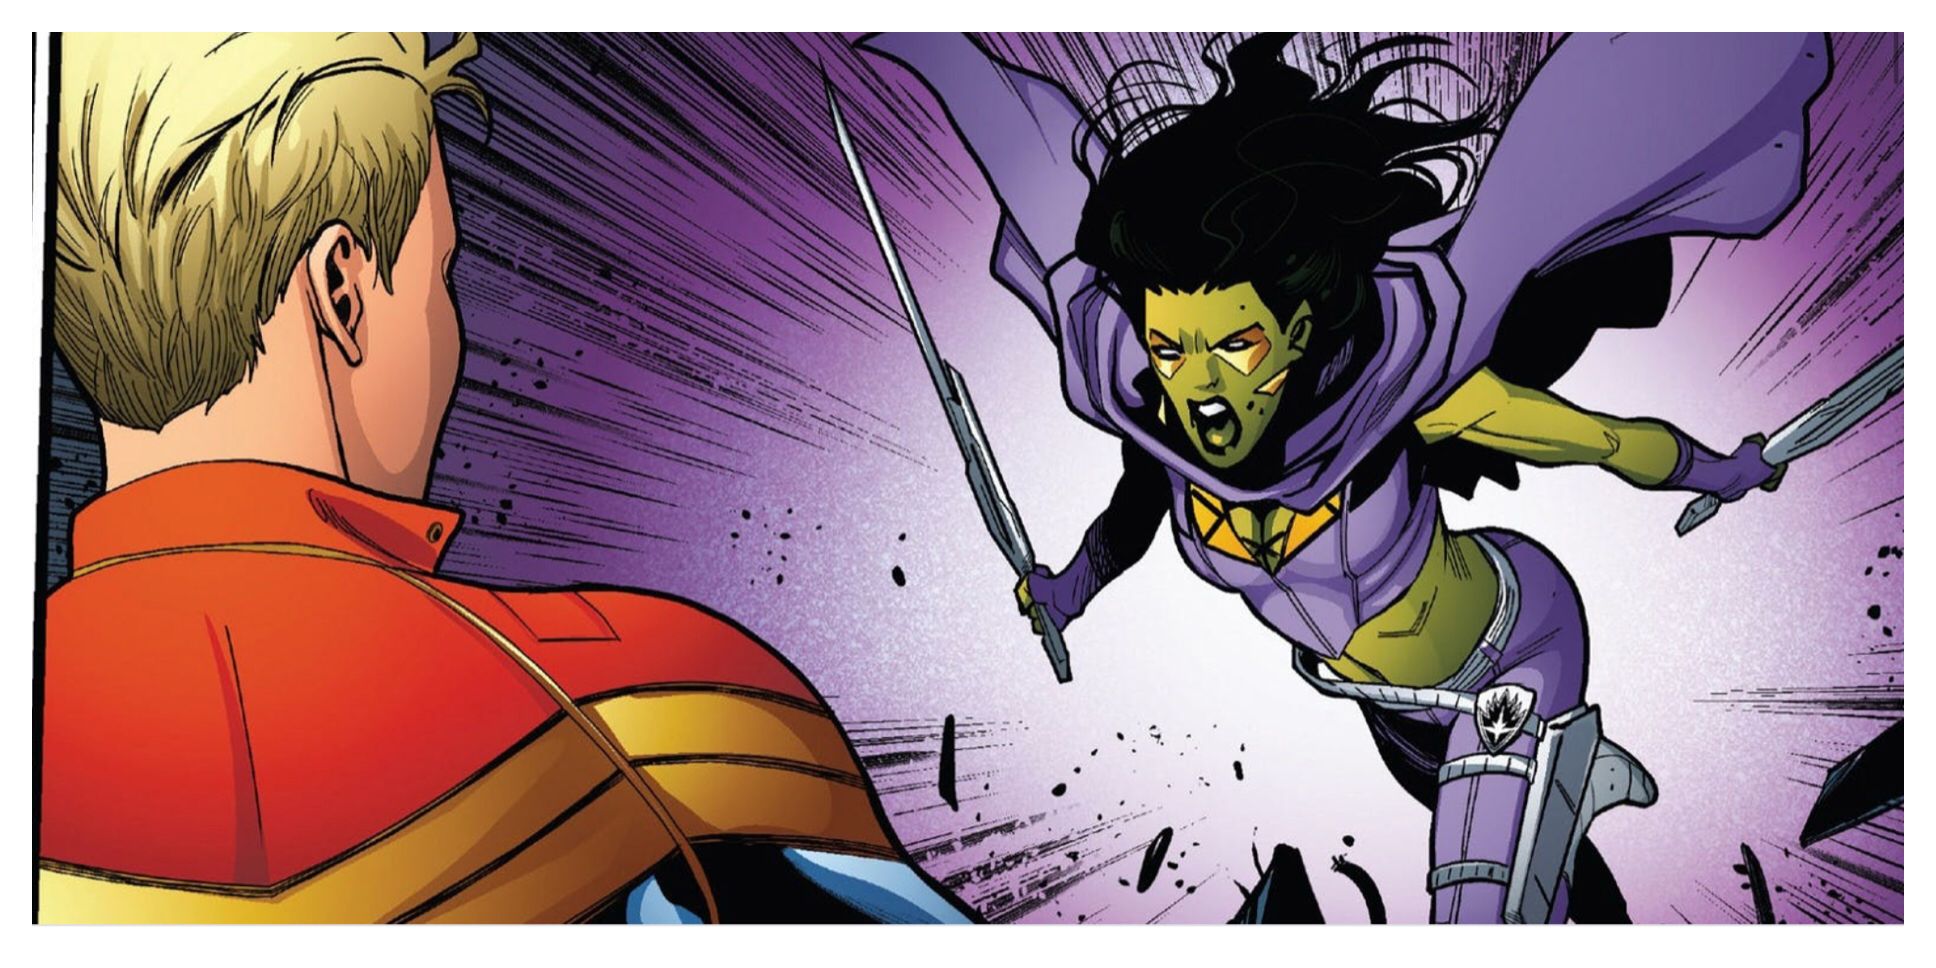 Gamora attacks Captain Marvel in Marvel Comics' Civil War II 